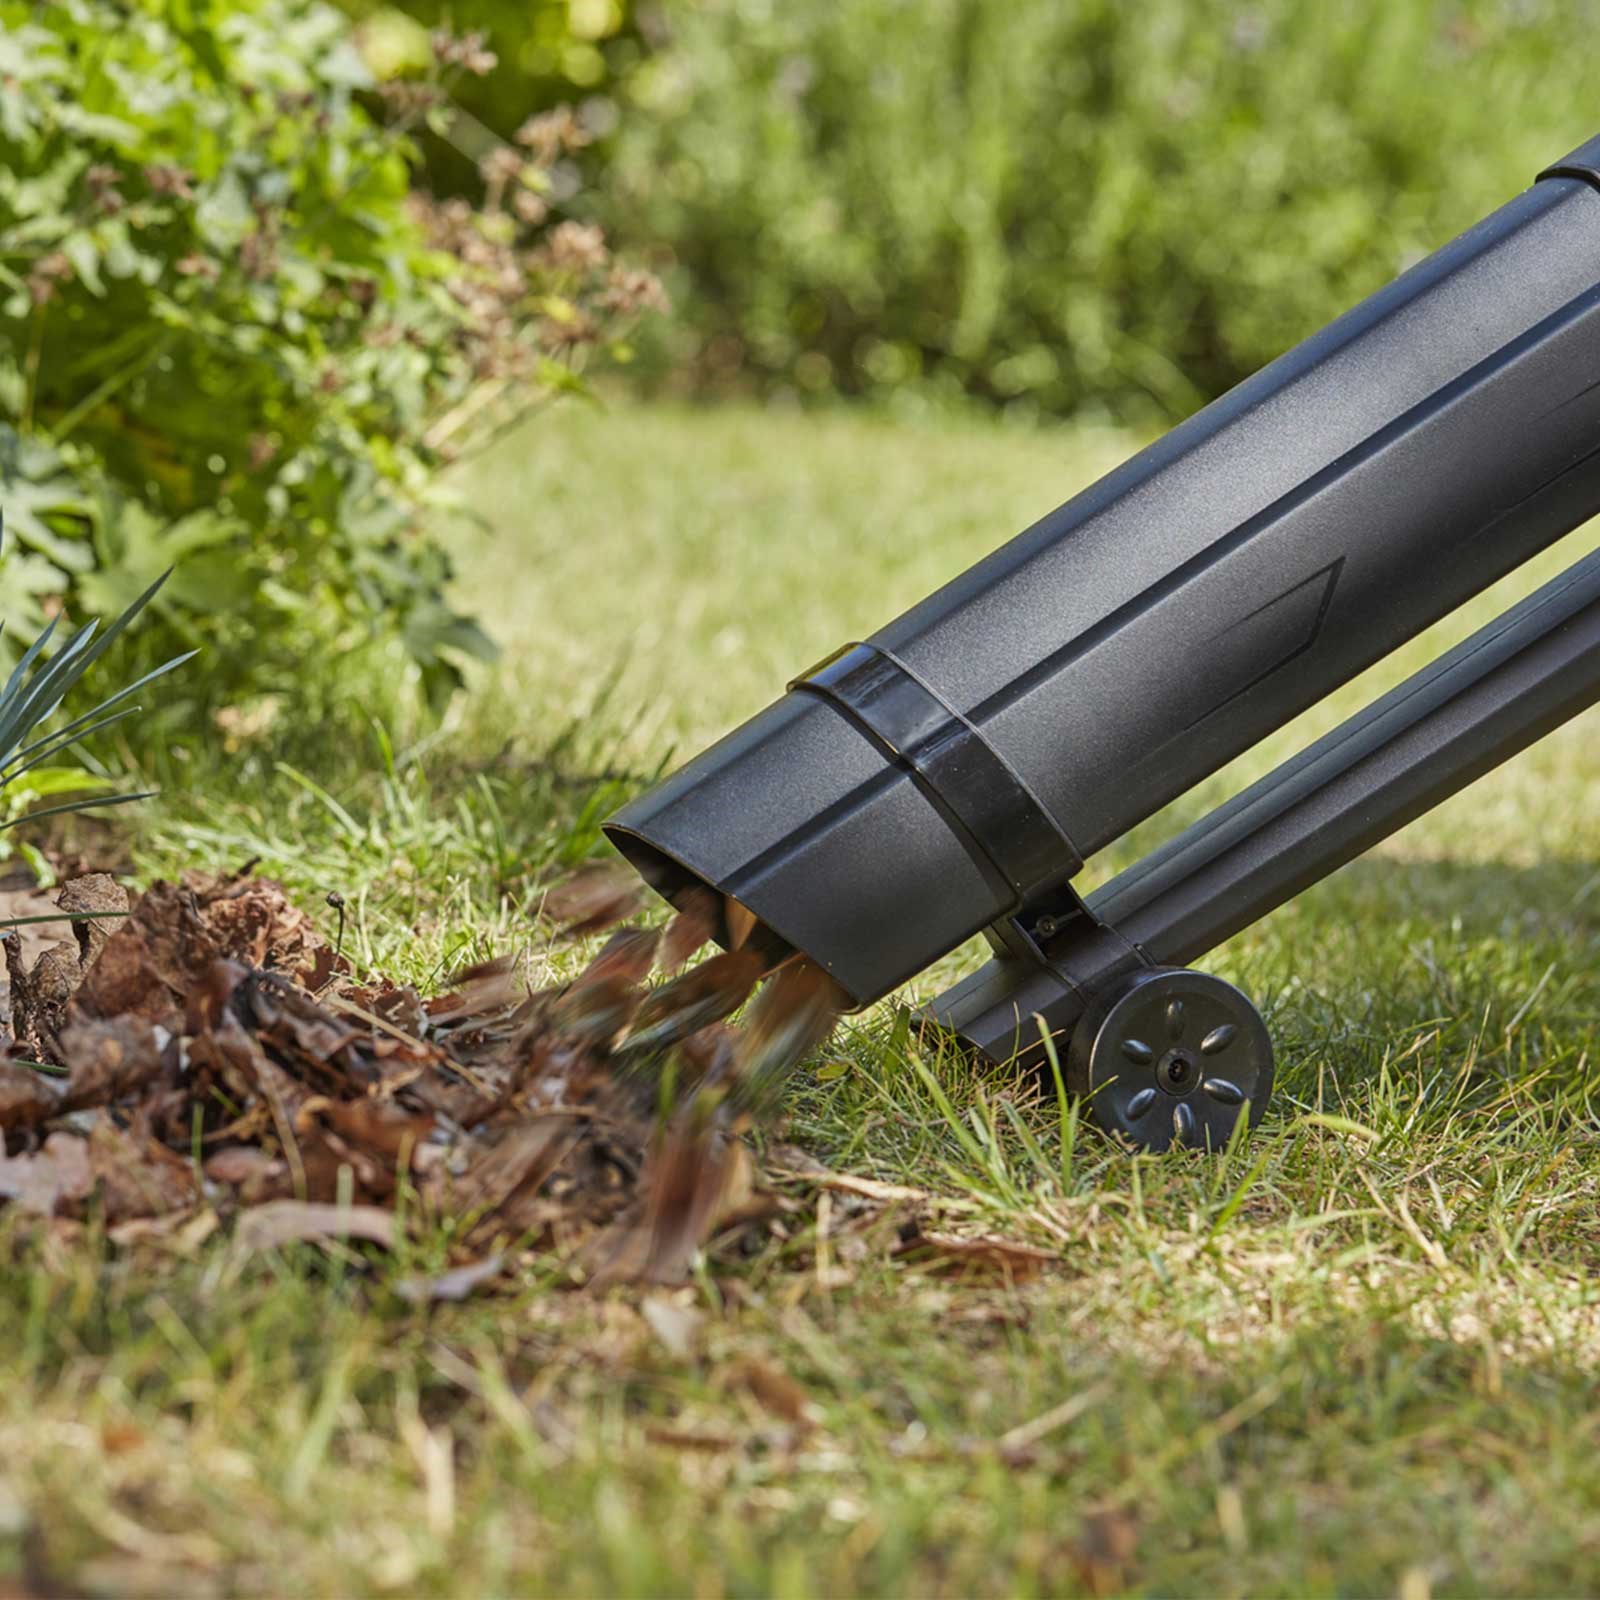 Black and Decker BCBLV36 36v Cordless Garden Vacuum and Leaf